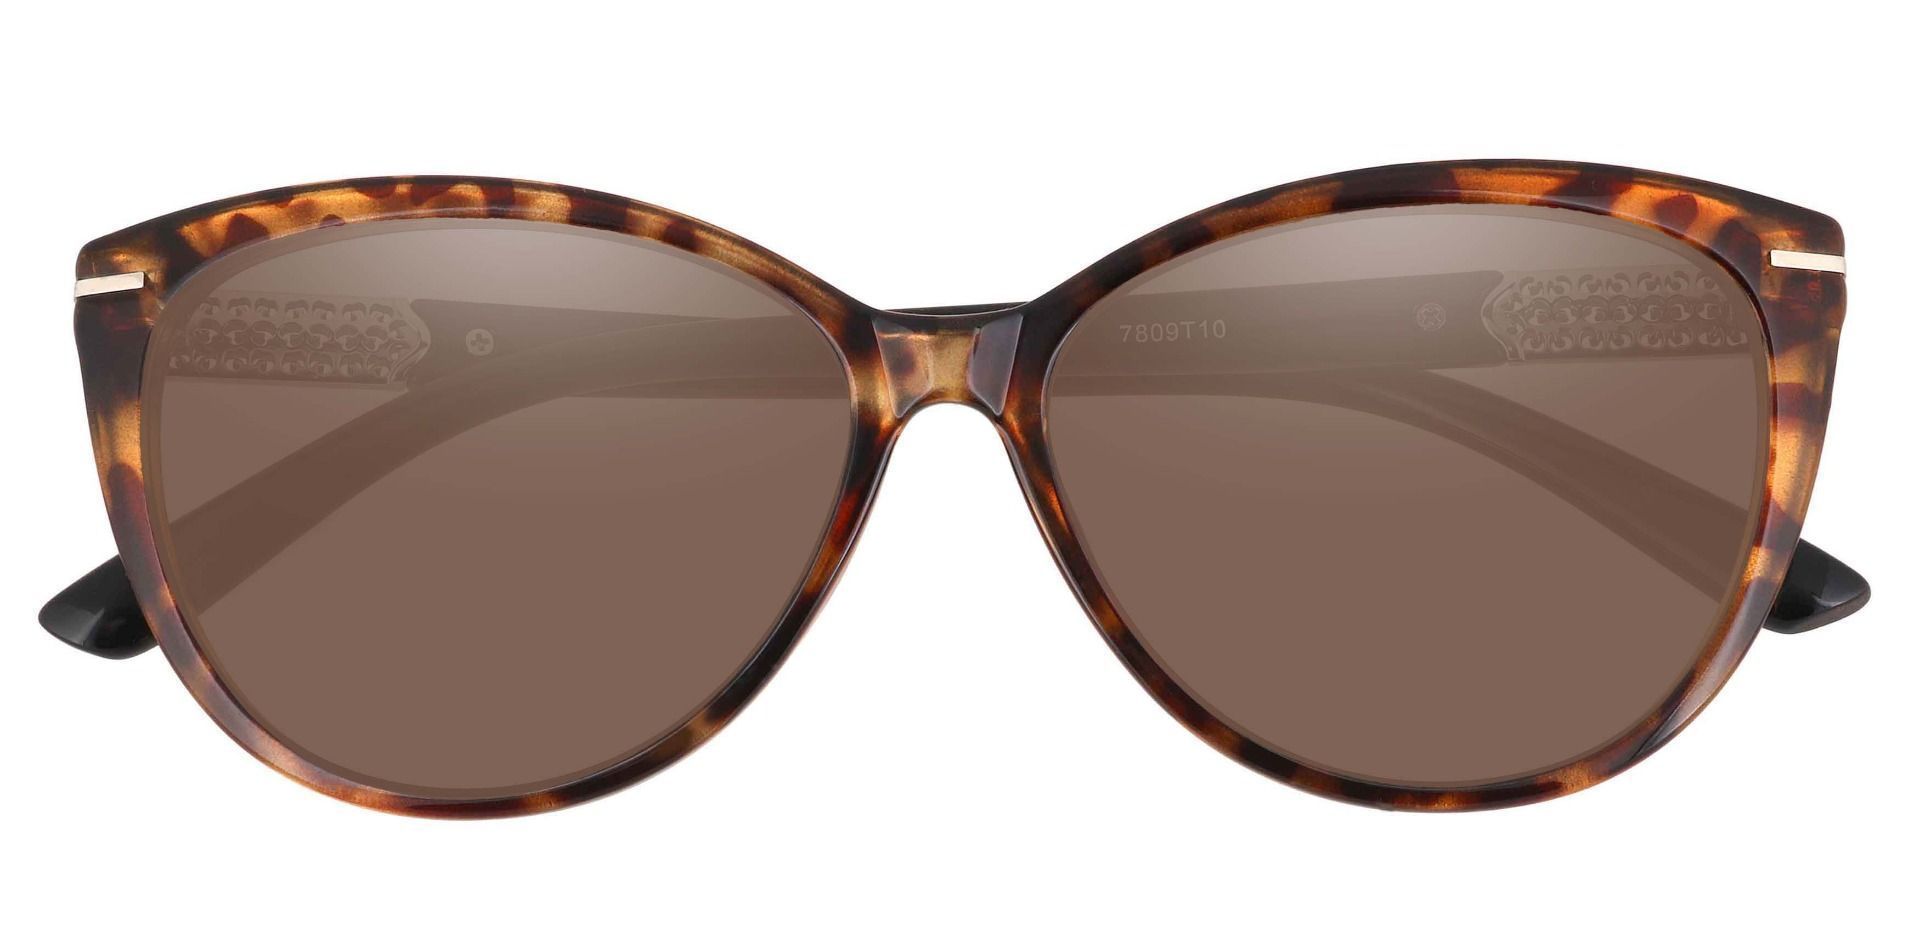 Maggie Cat Eye Prescription Sunglasses - Tortoise Frame With Brown ...